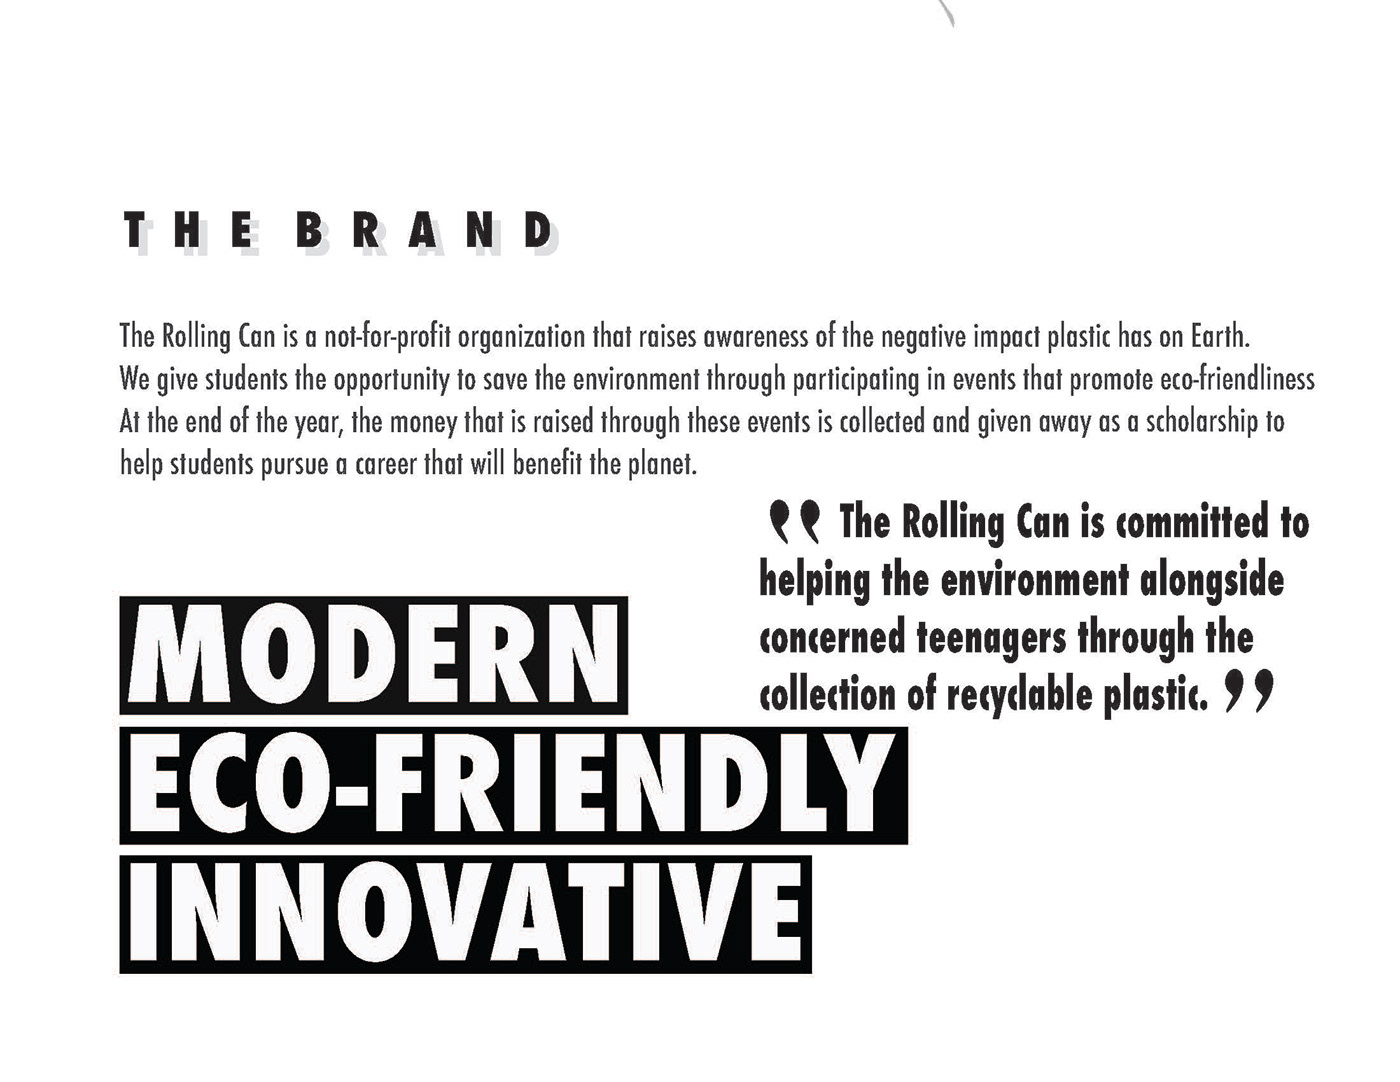 logo ILLUSTRATION  environment recycled company Branding Book